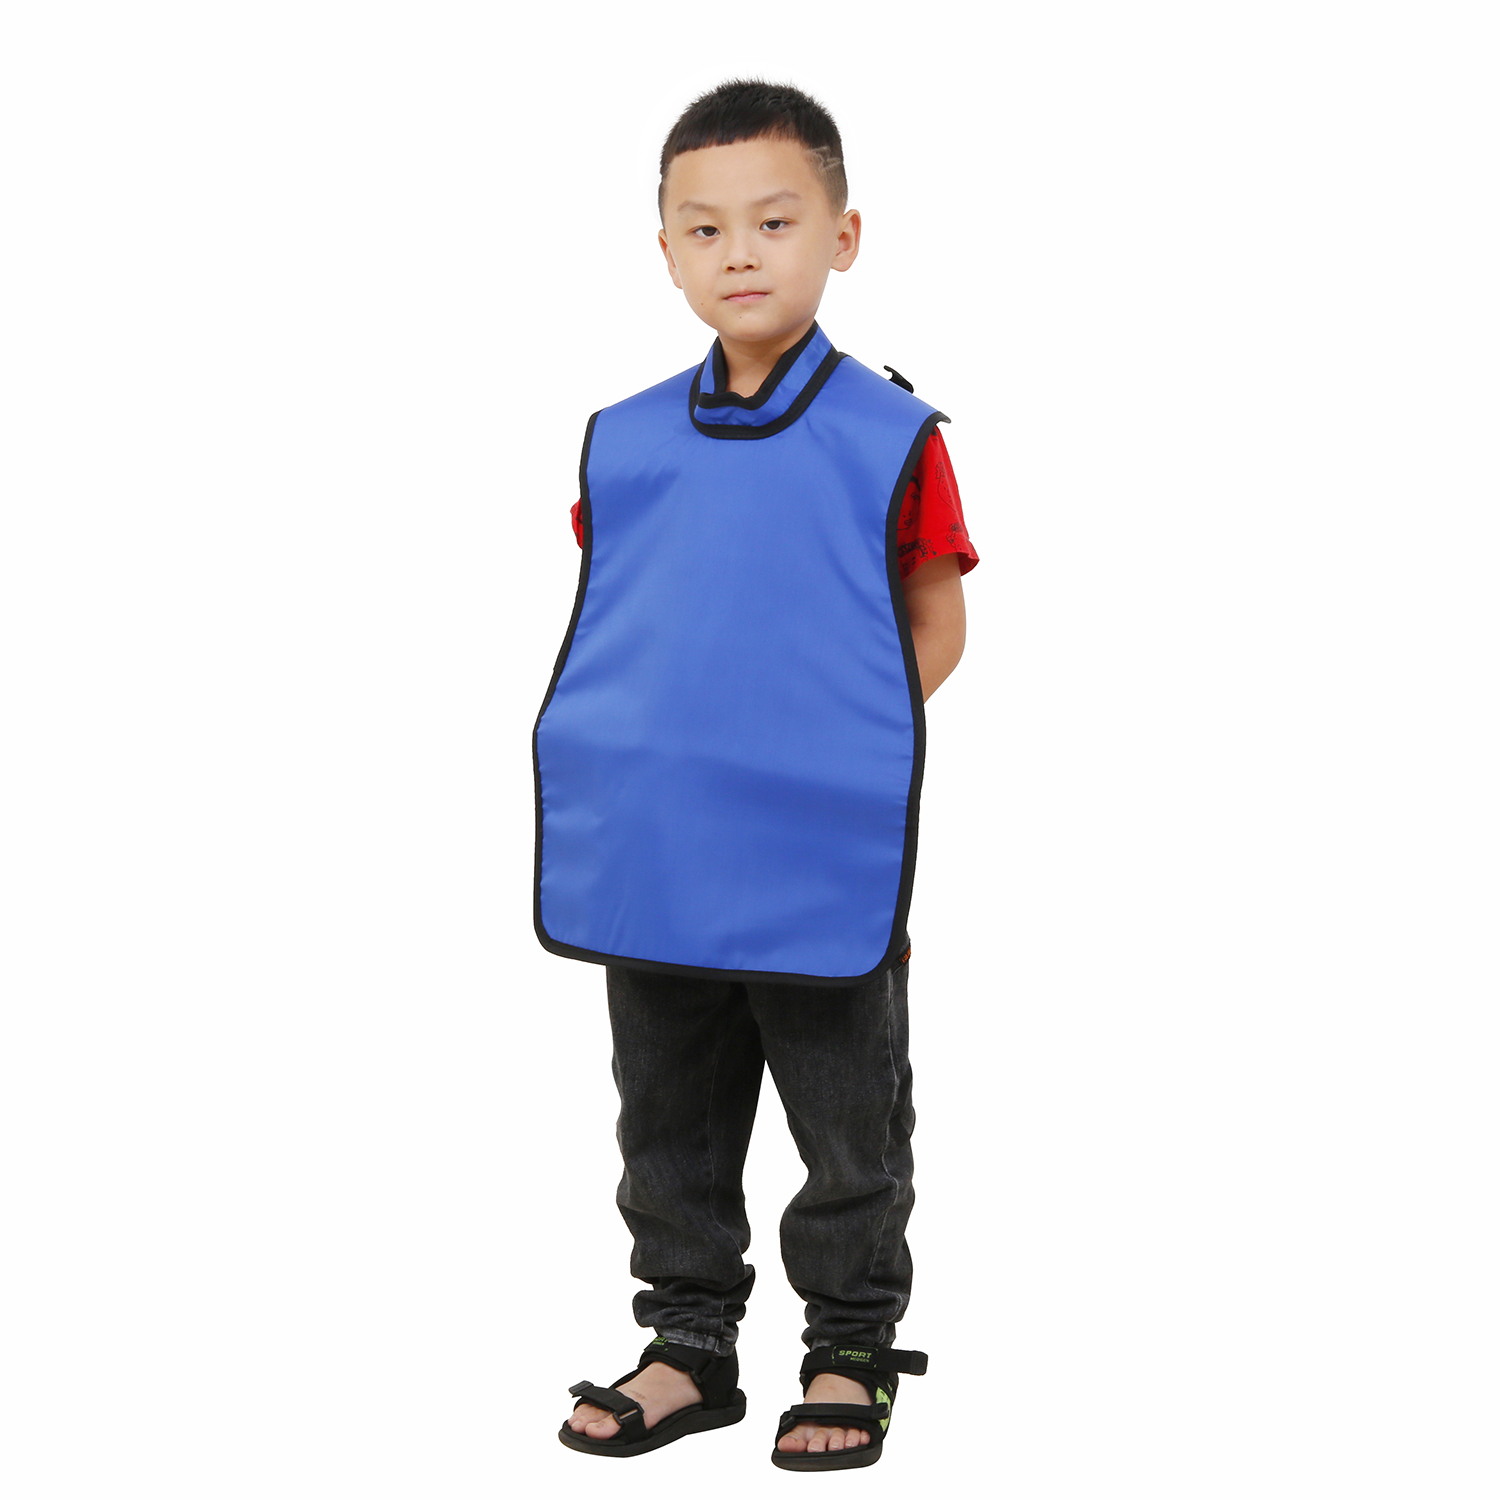 TY054 High collar apron children